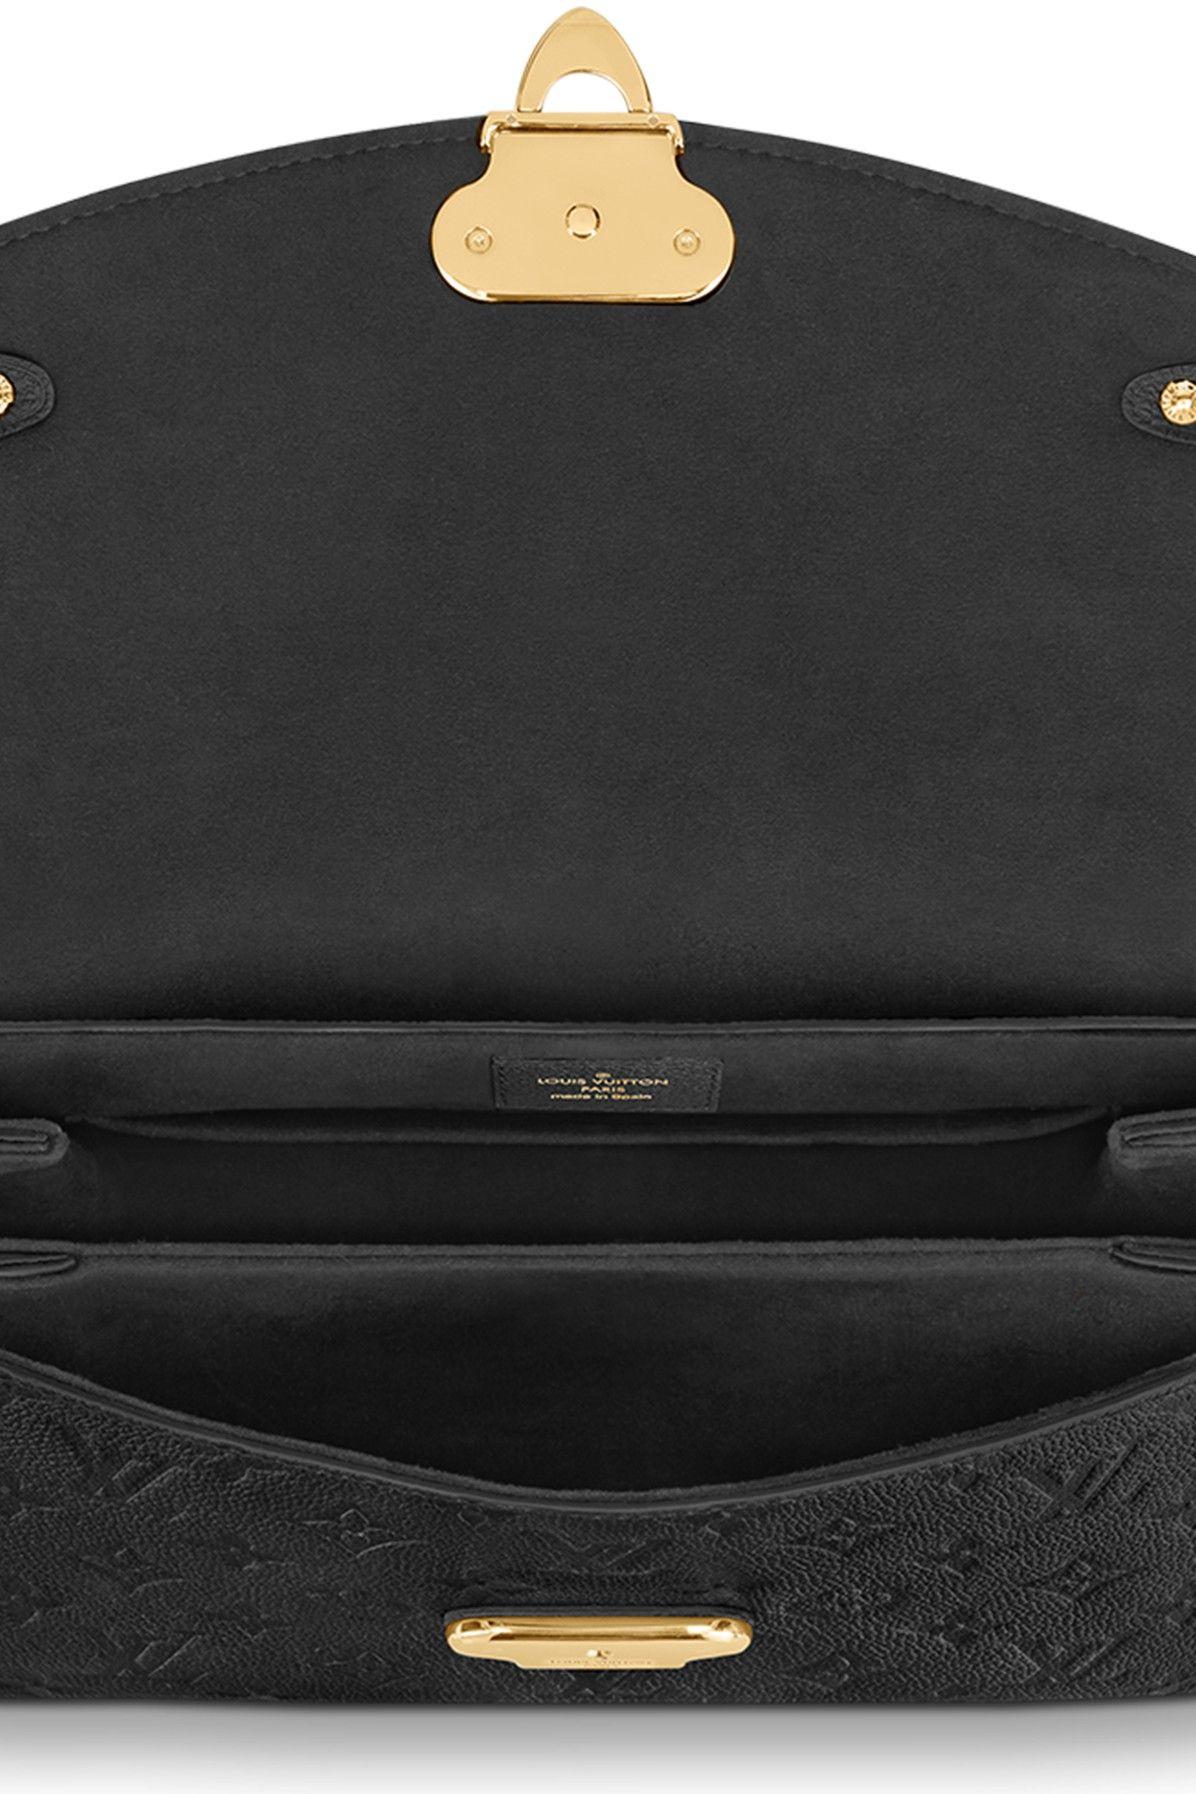 Louis Vuitton Georges BB empreinte noir: My first LV handbag from Spain! 